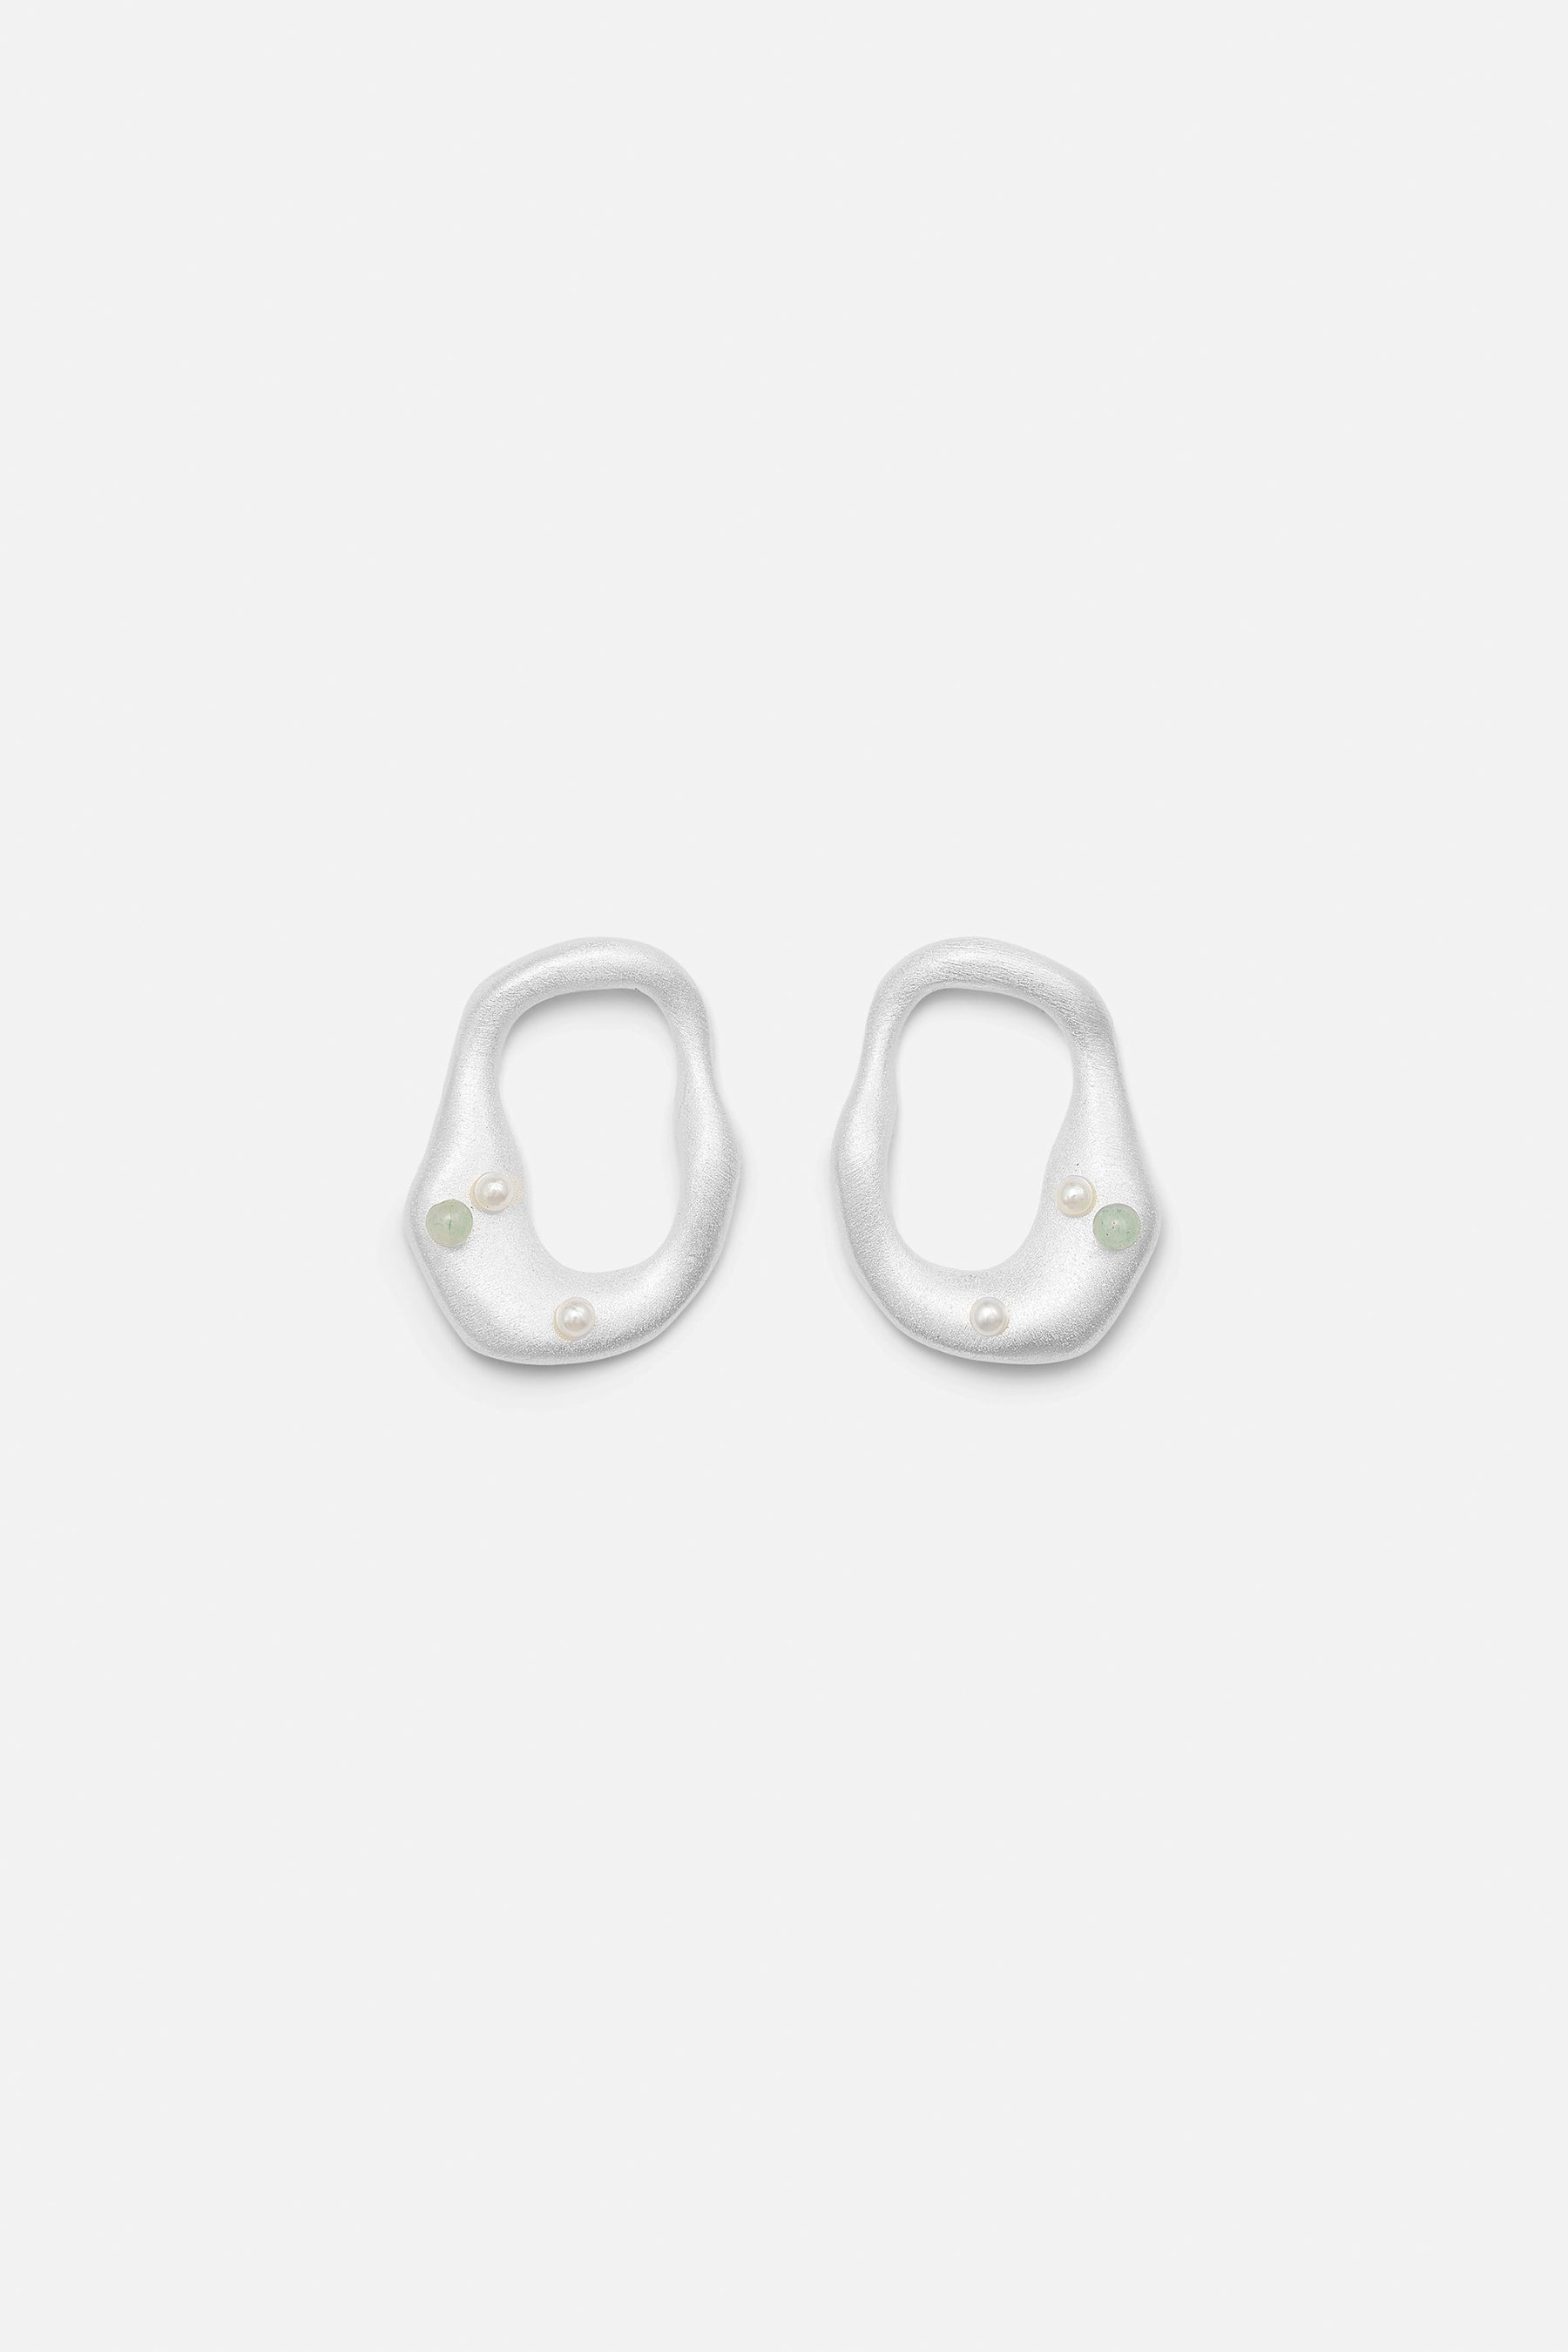 Sorelle ApS Care earring Earring Sterling Silver